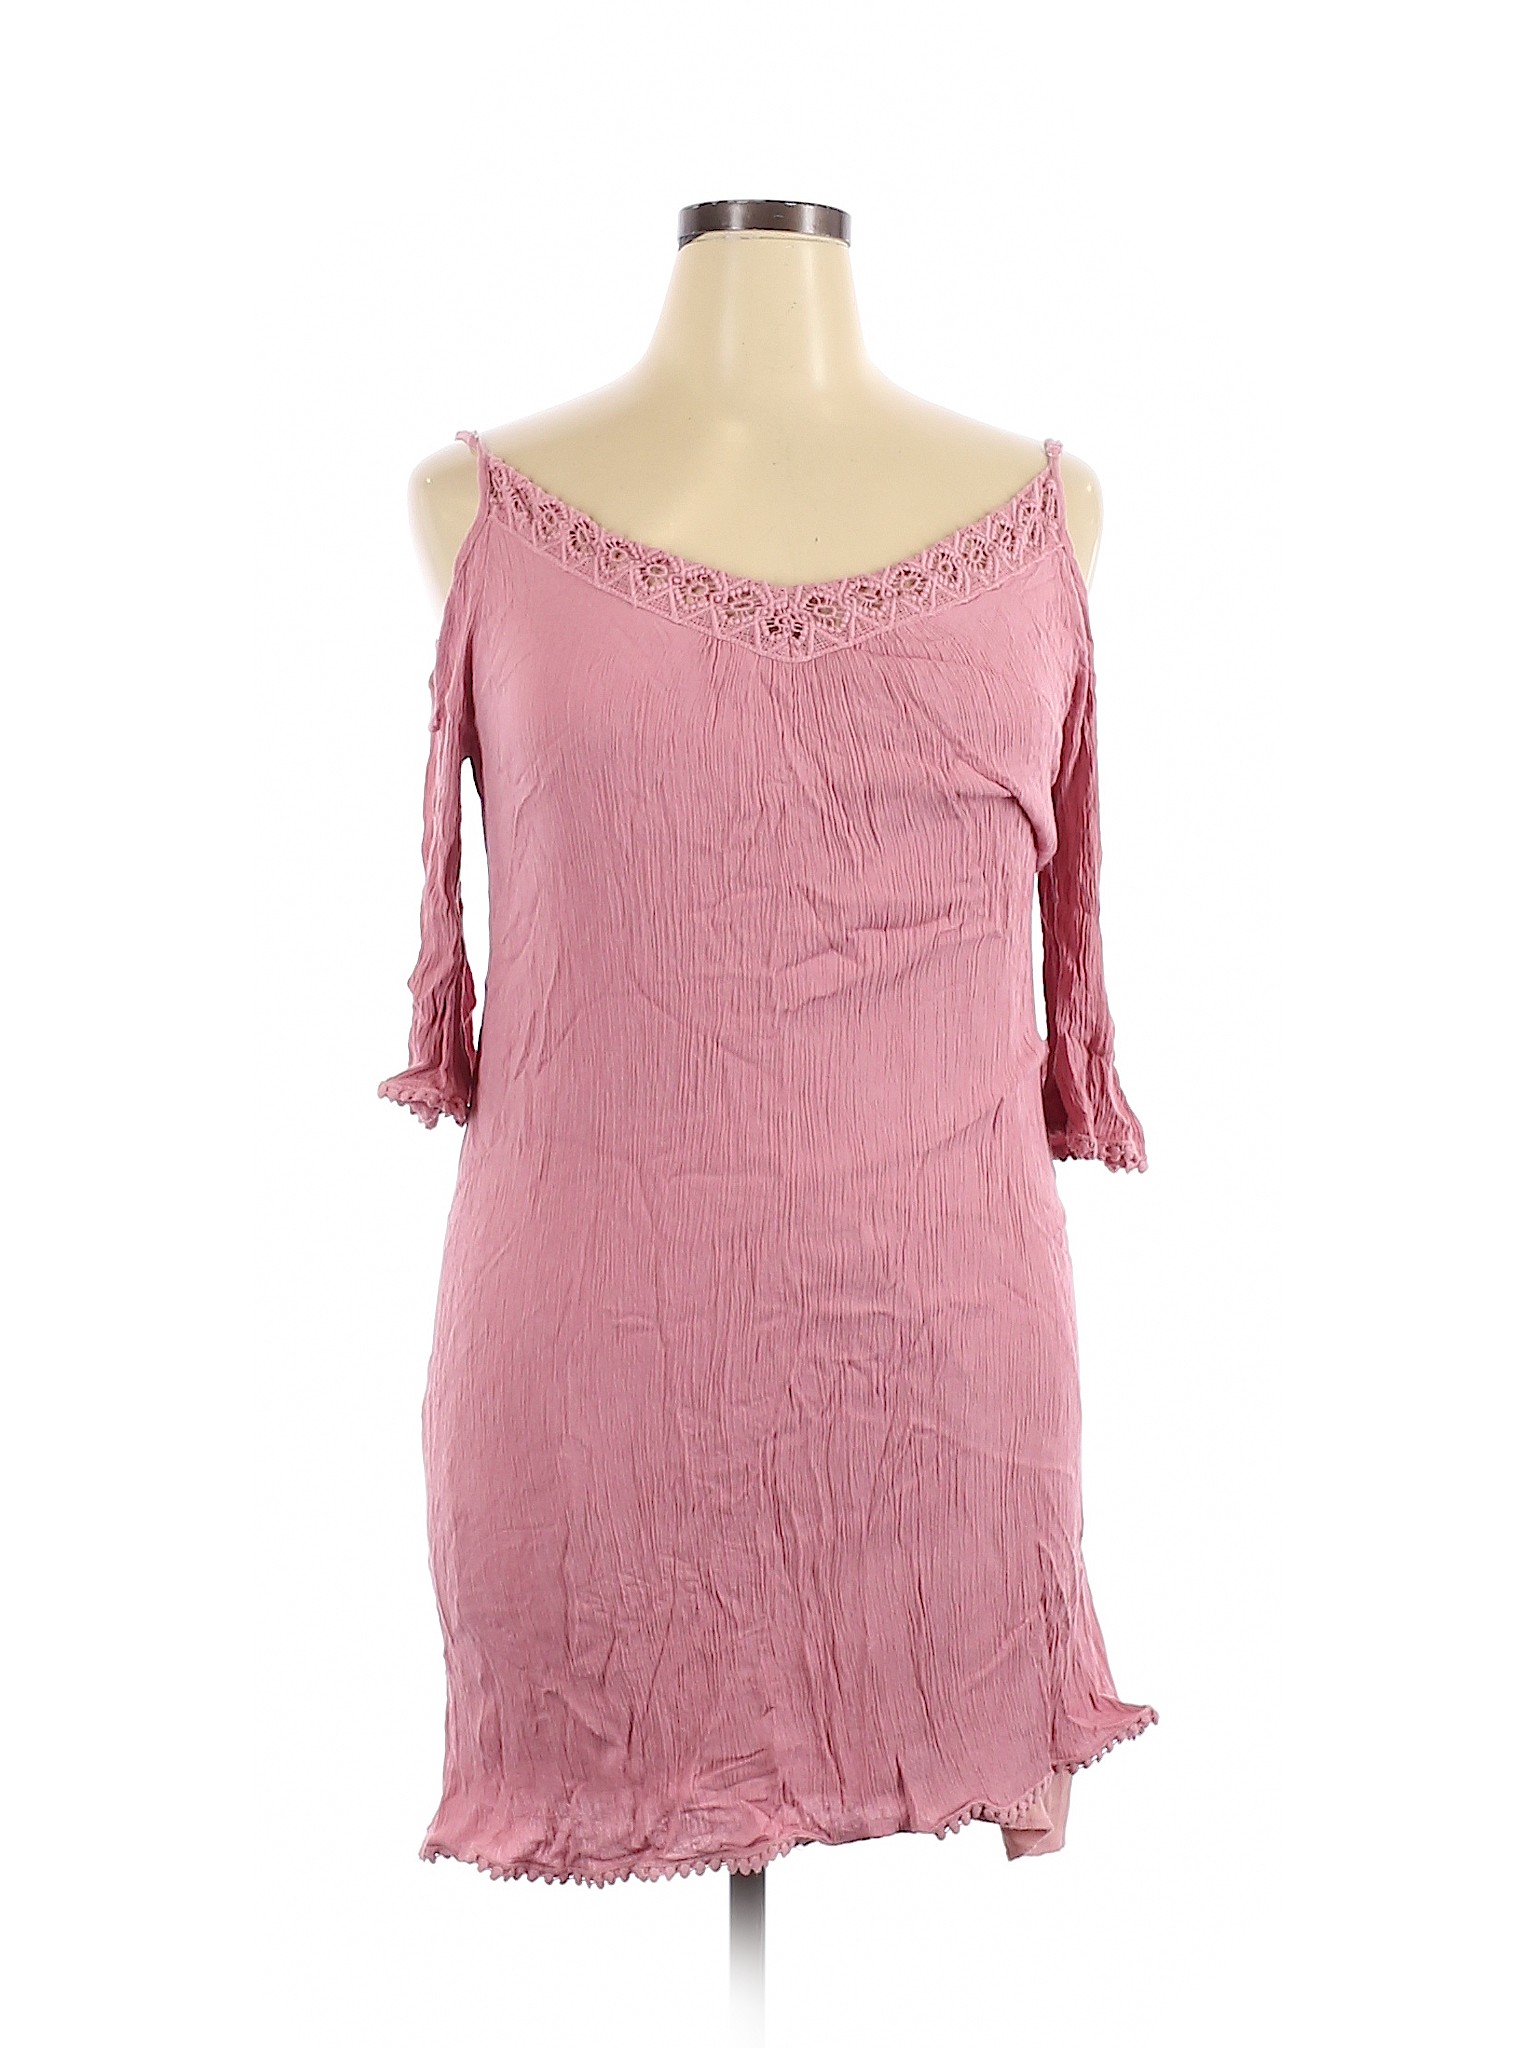 Naif Women Pink Casual Dress 1X Plus | eBay